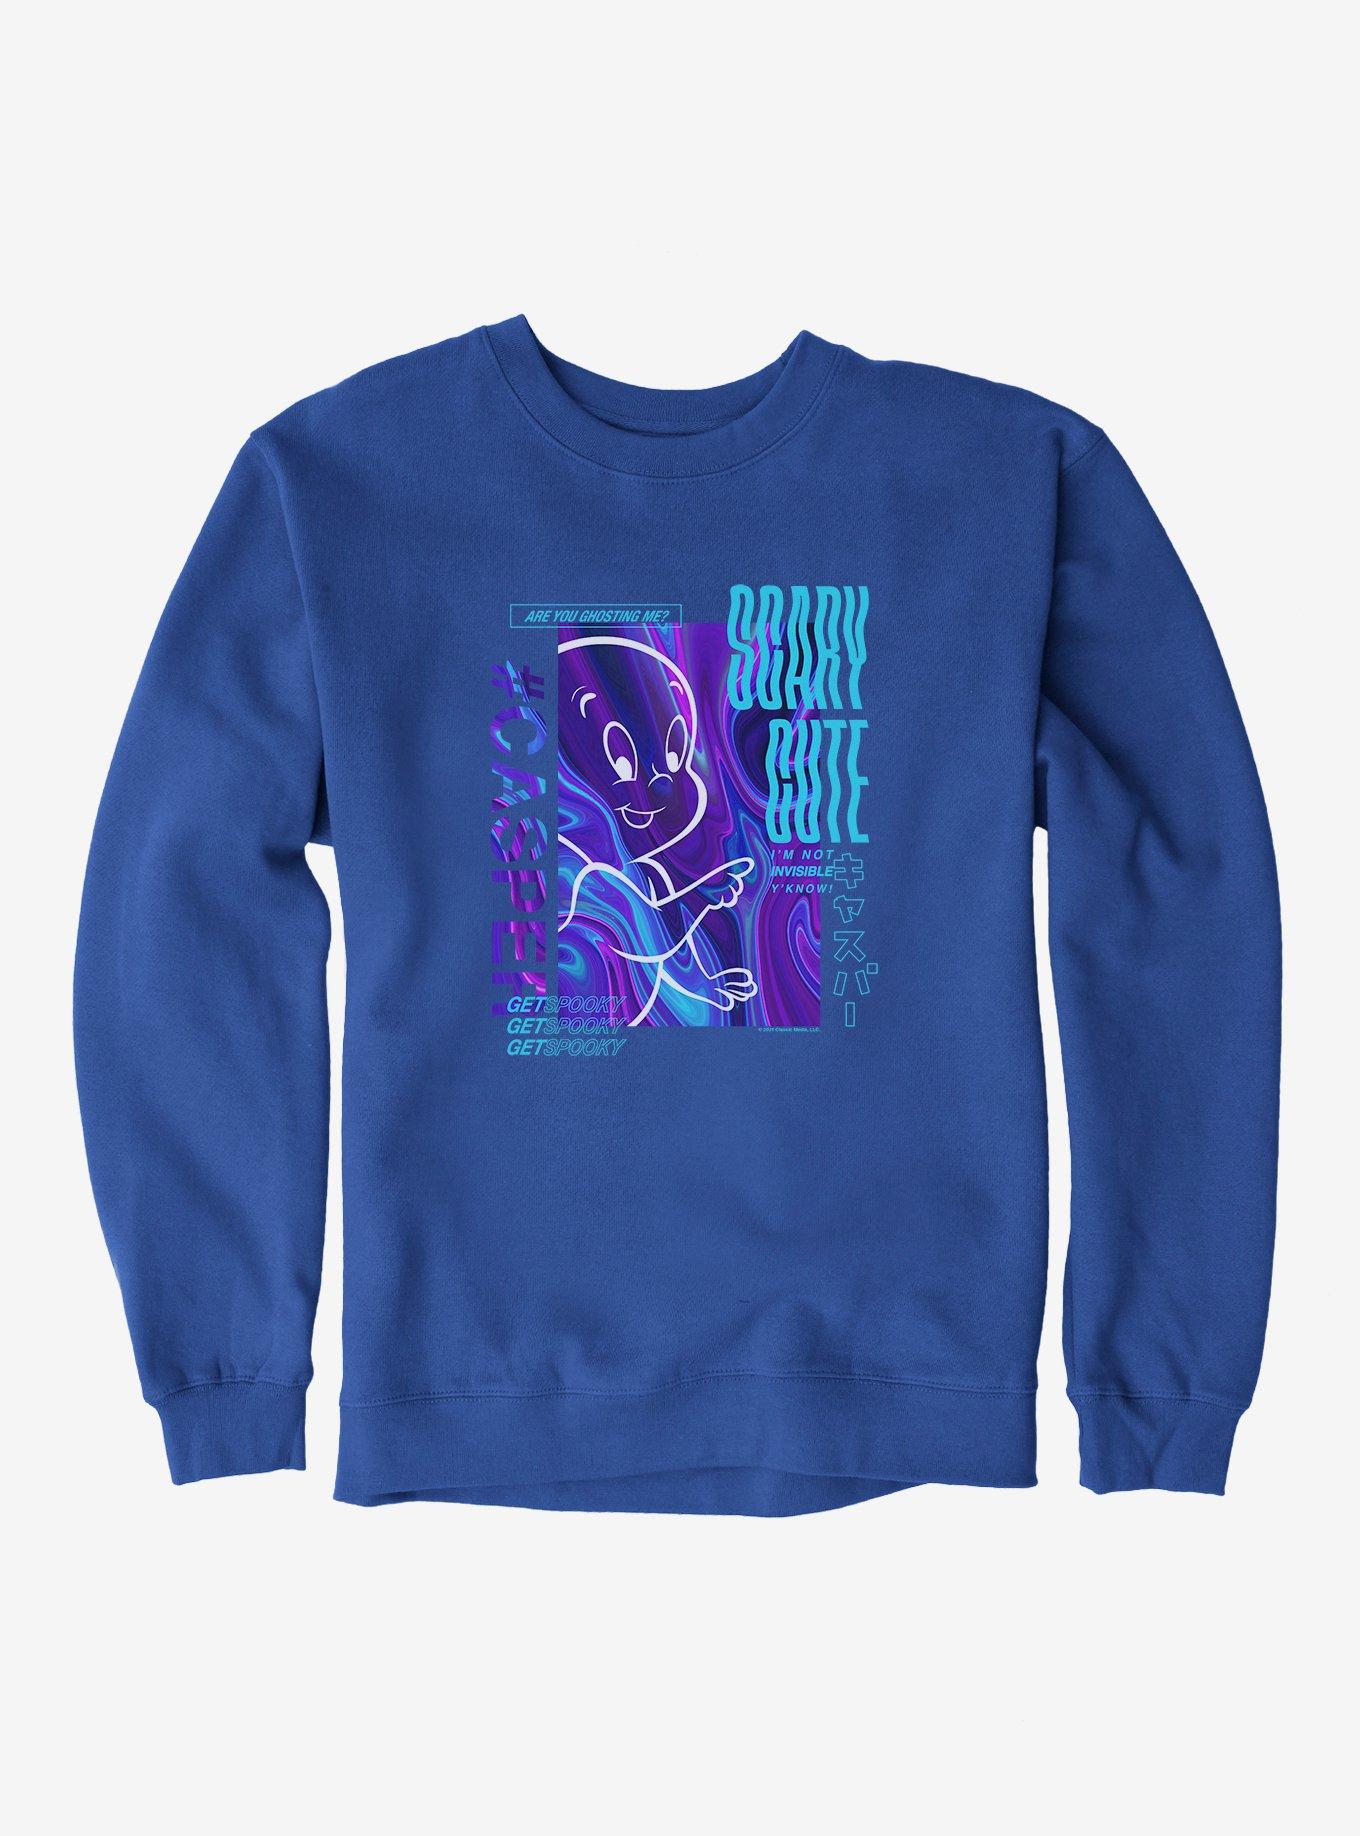 Casper The Friendly Ghost Virtual Raver Scary Cute Sweatshirt, ROYAL BLUE, hi-res